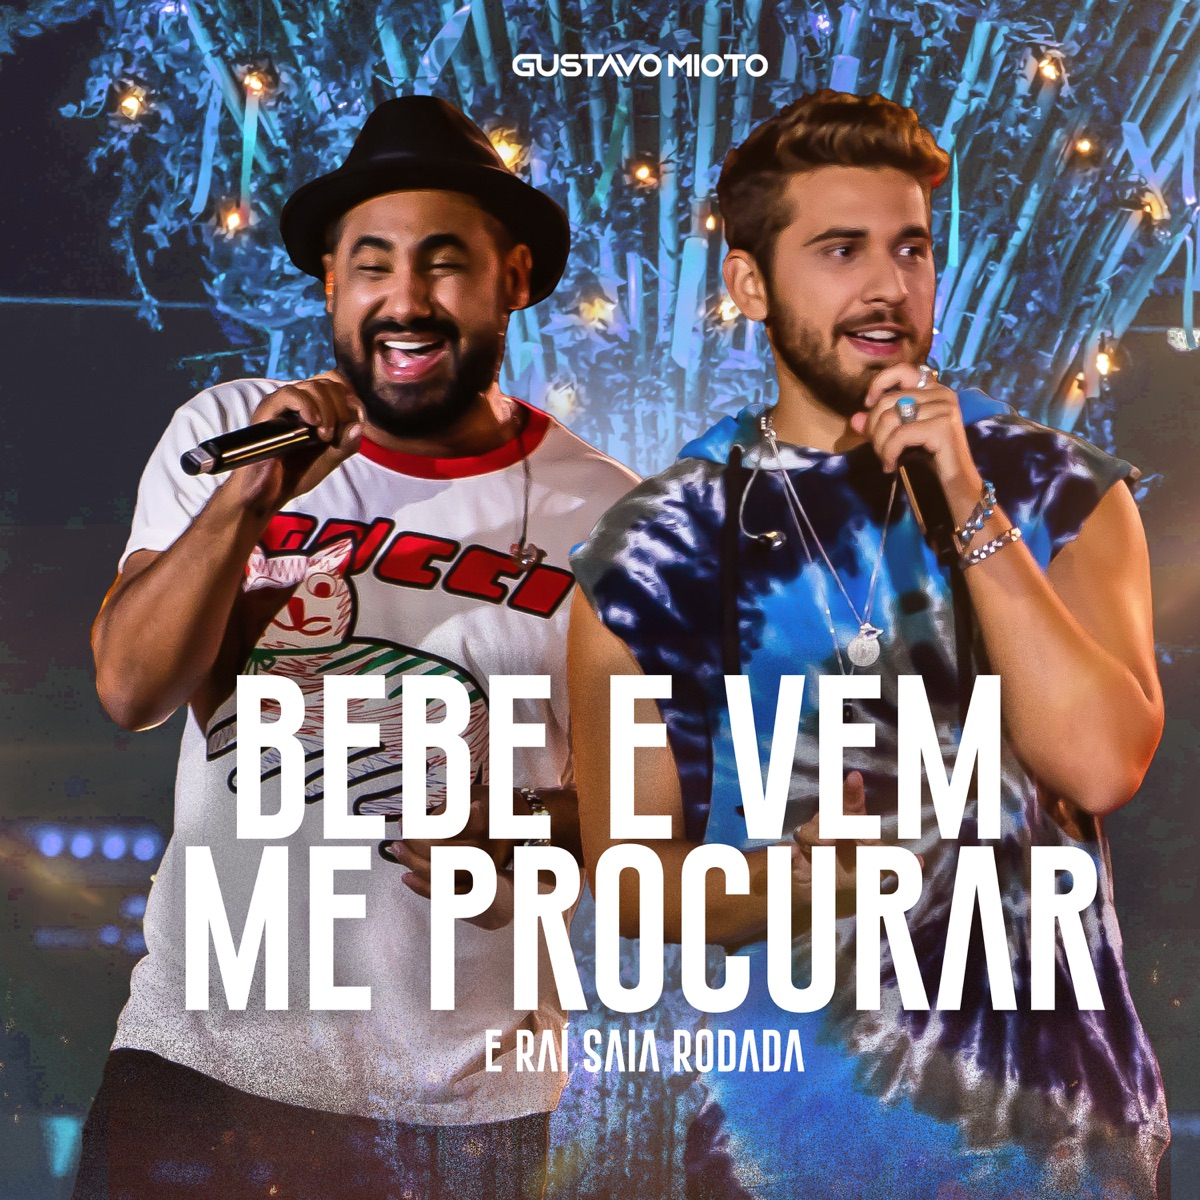 Gustavo Mioto & Saia Rodada Bebe e Vem Me Procurar (Ao Vivo) cover artwork